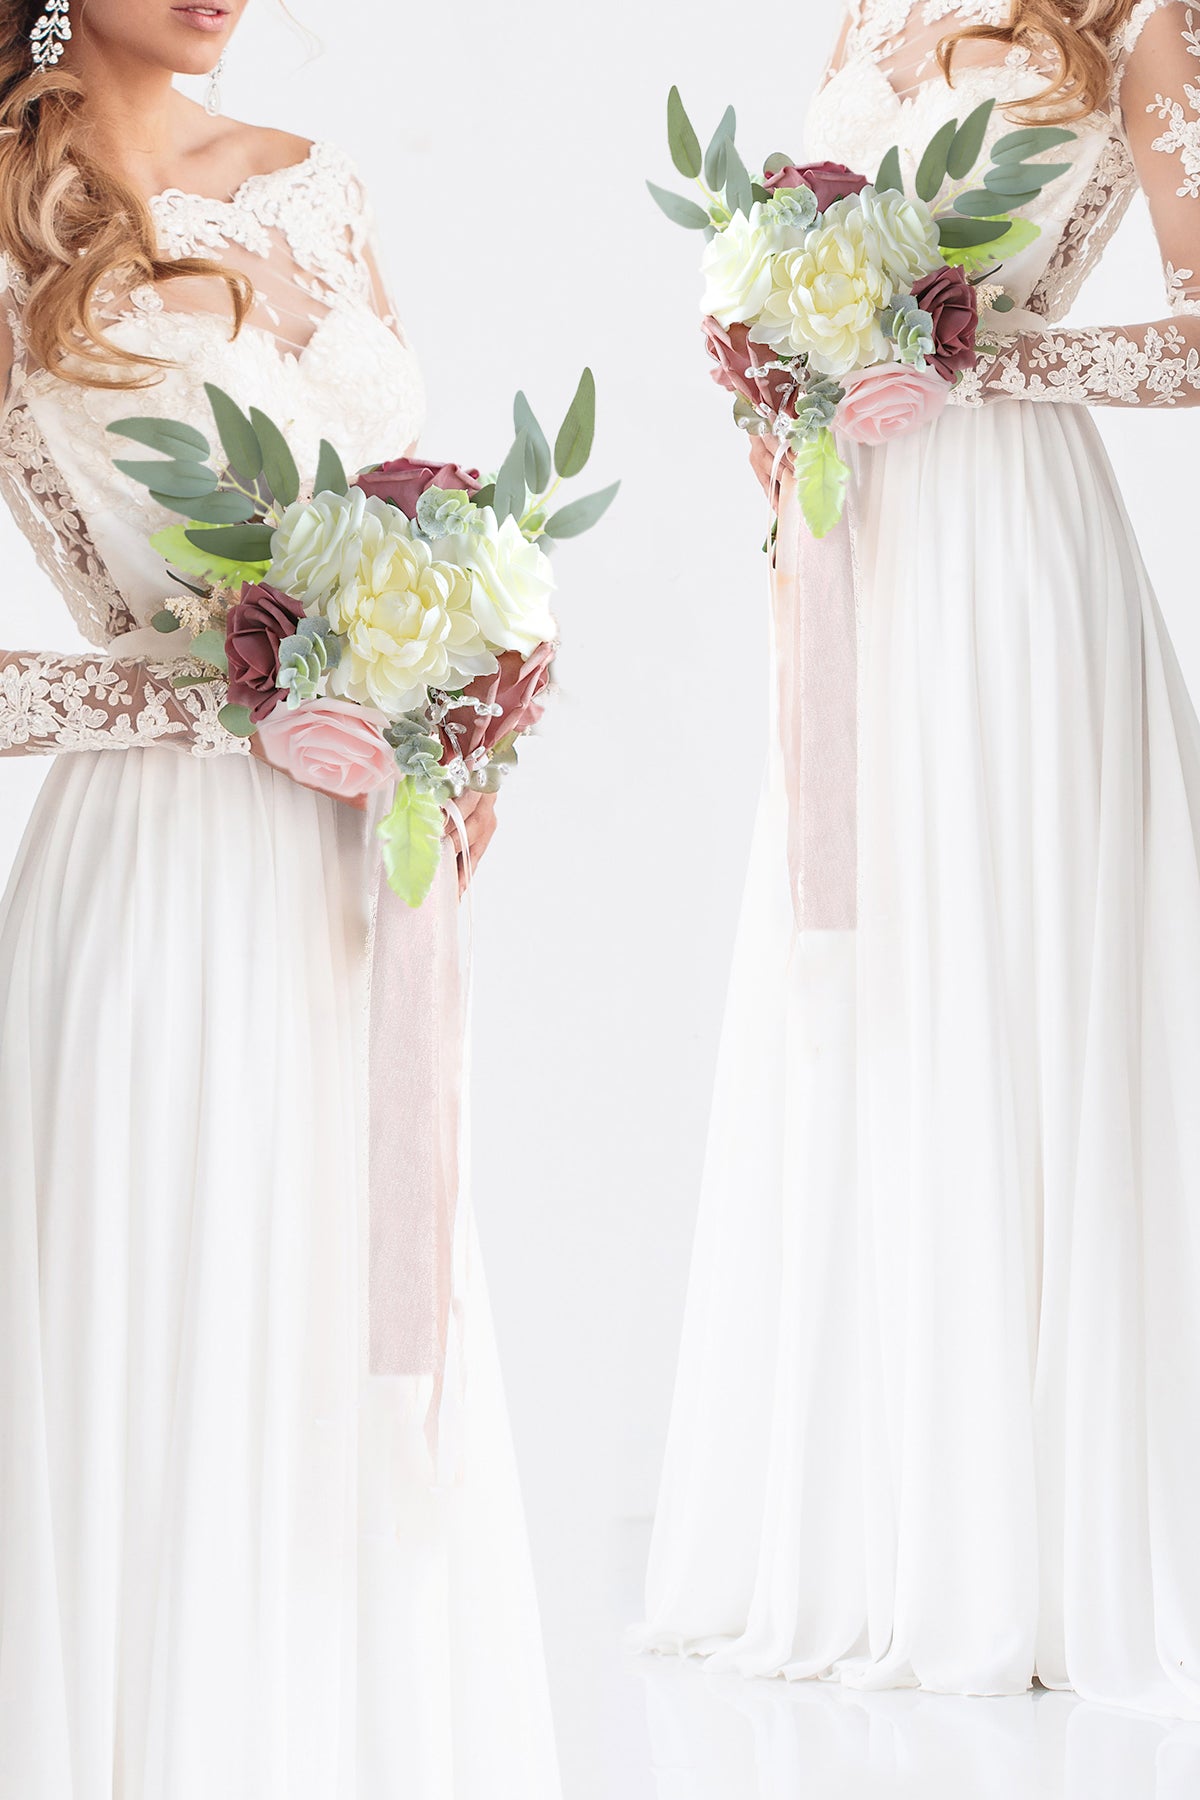 8''/10'' Bridesmaid Bouquets, Set of 4, Wedding Centerpieces - Dusty Rose